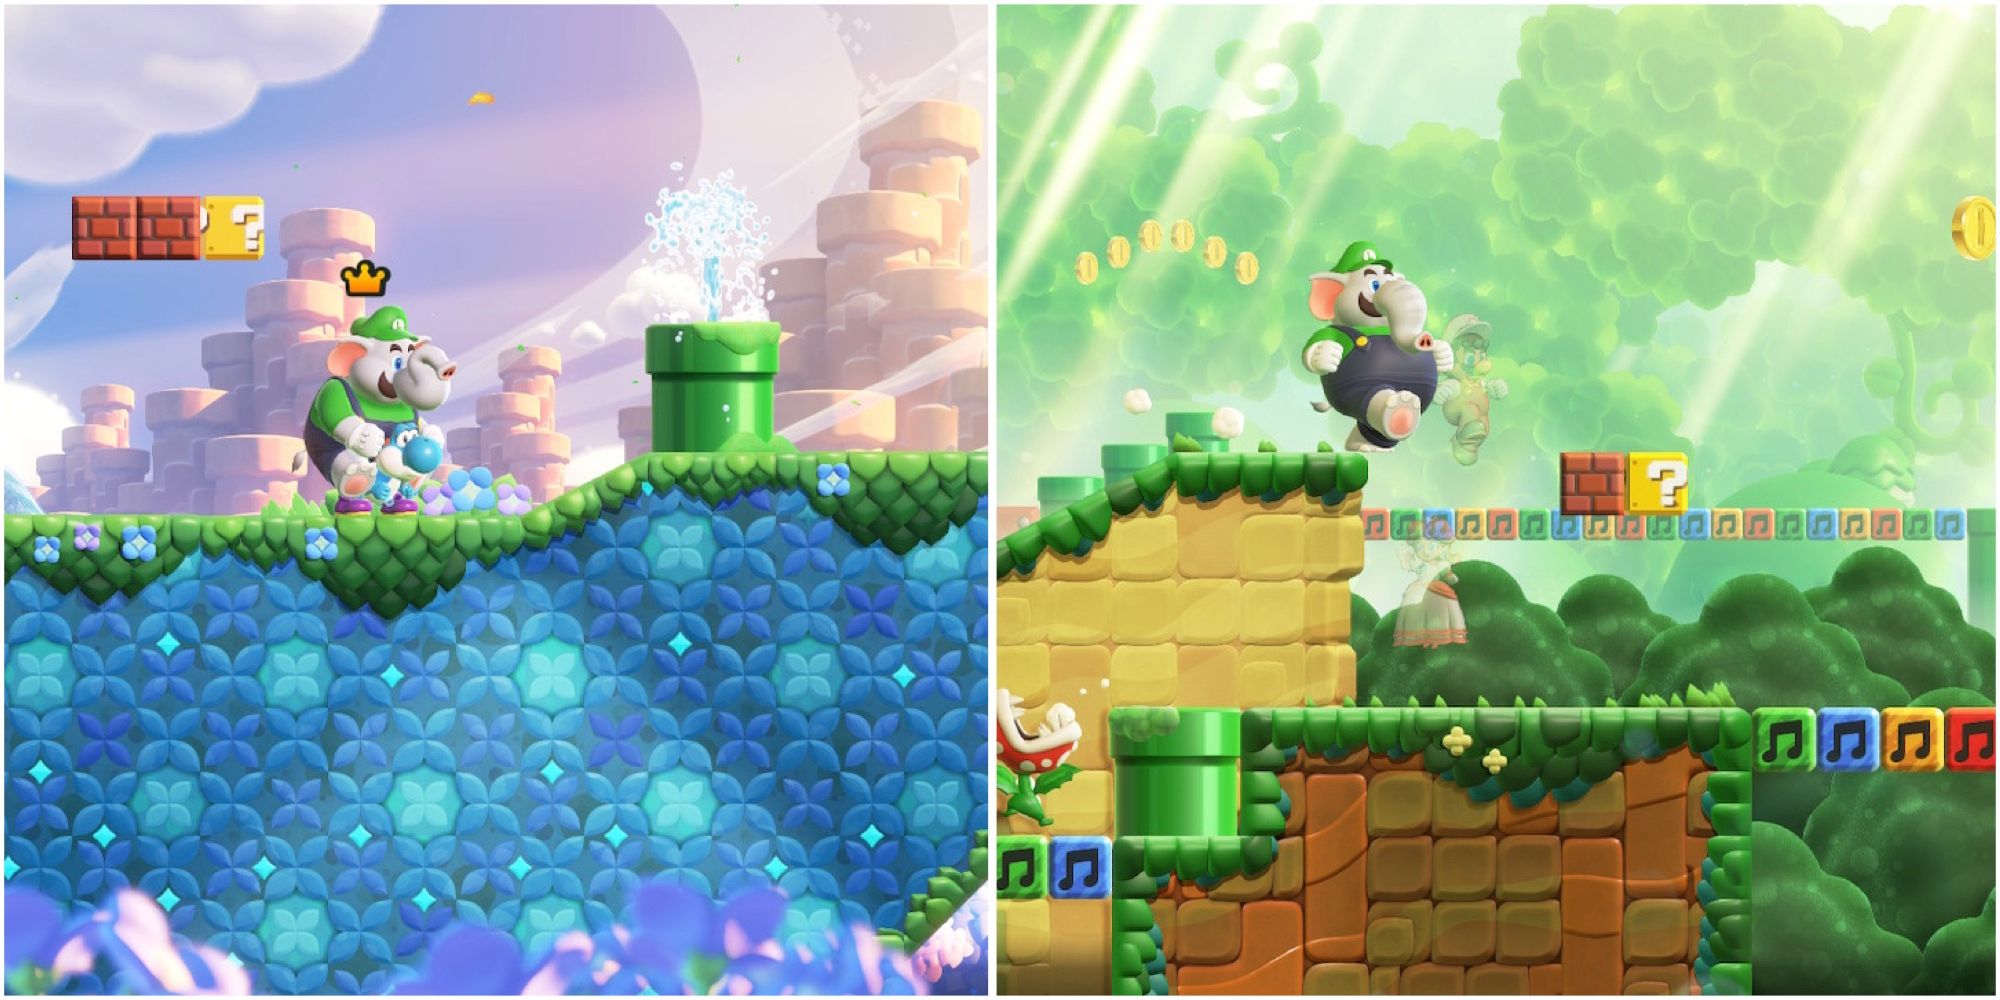 Playing levels as Luigi in Super Mario Bros. Wonder